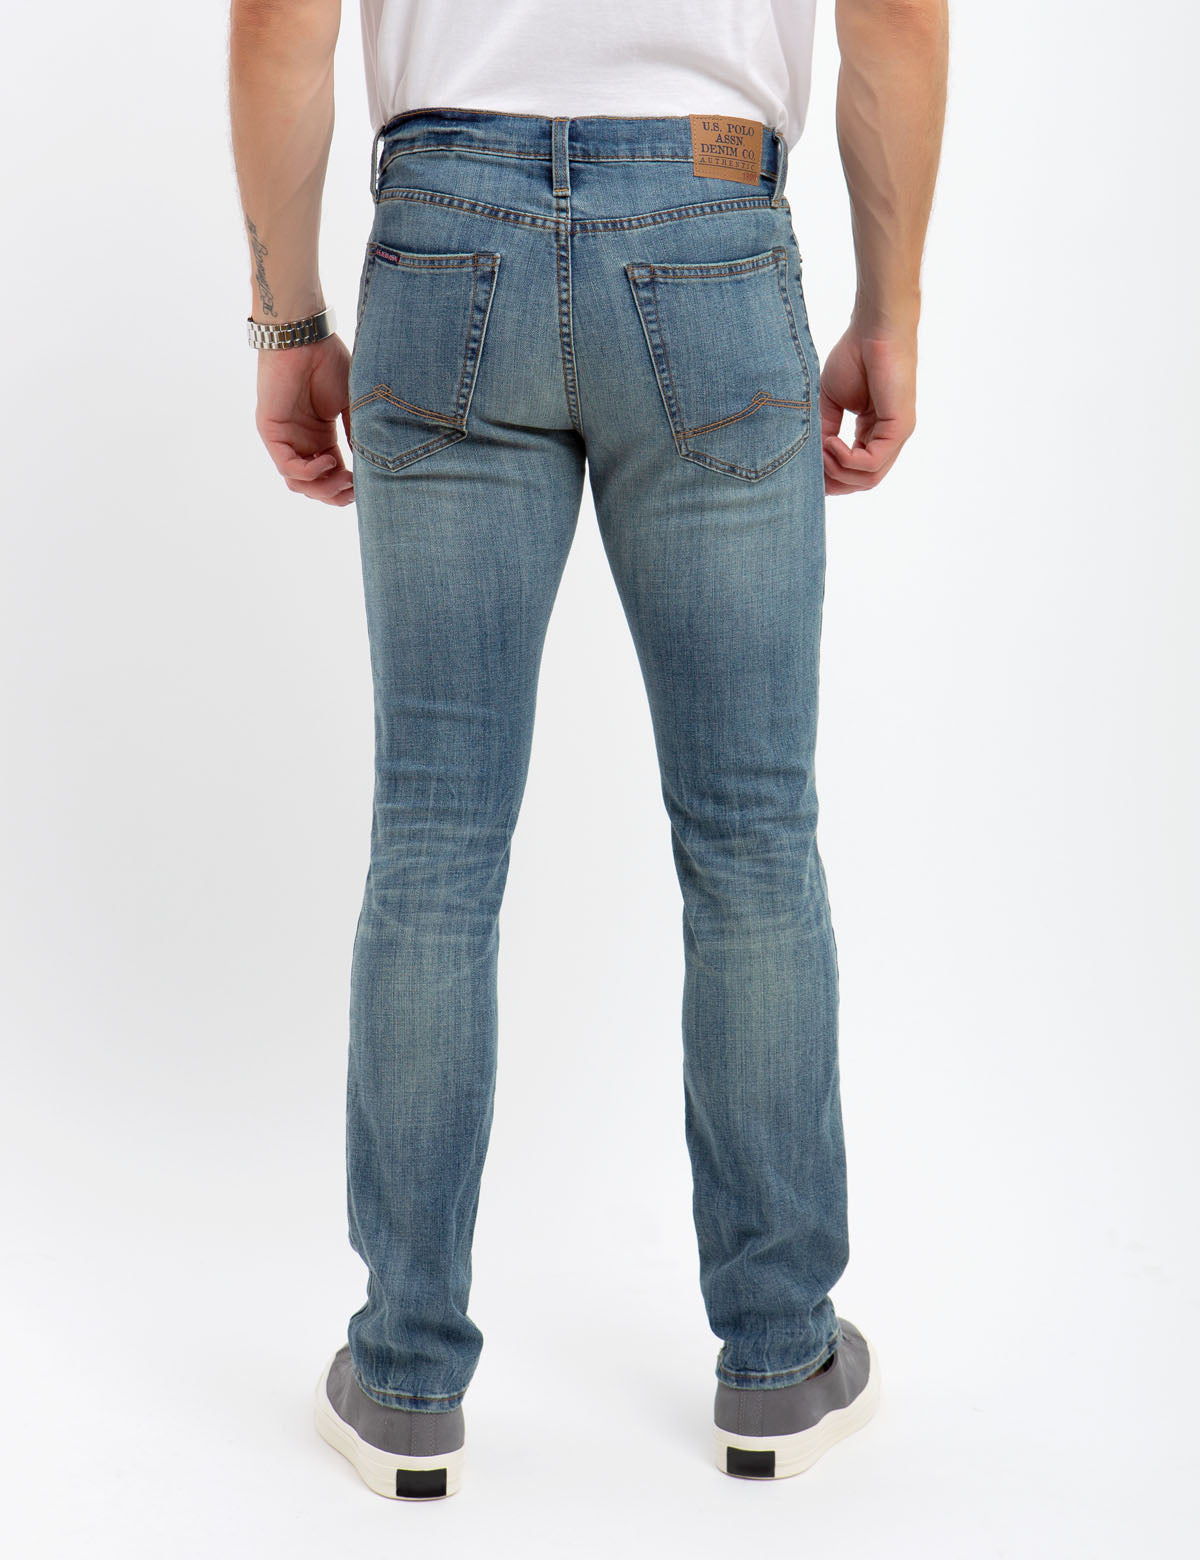 polo skinny jeans